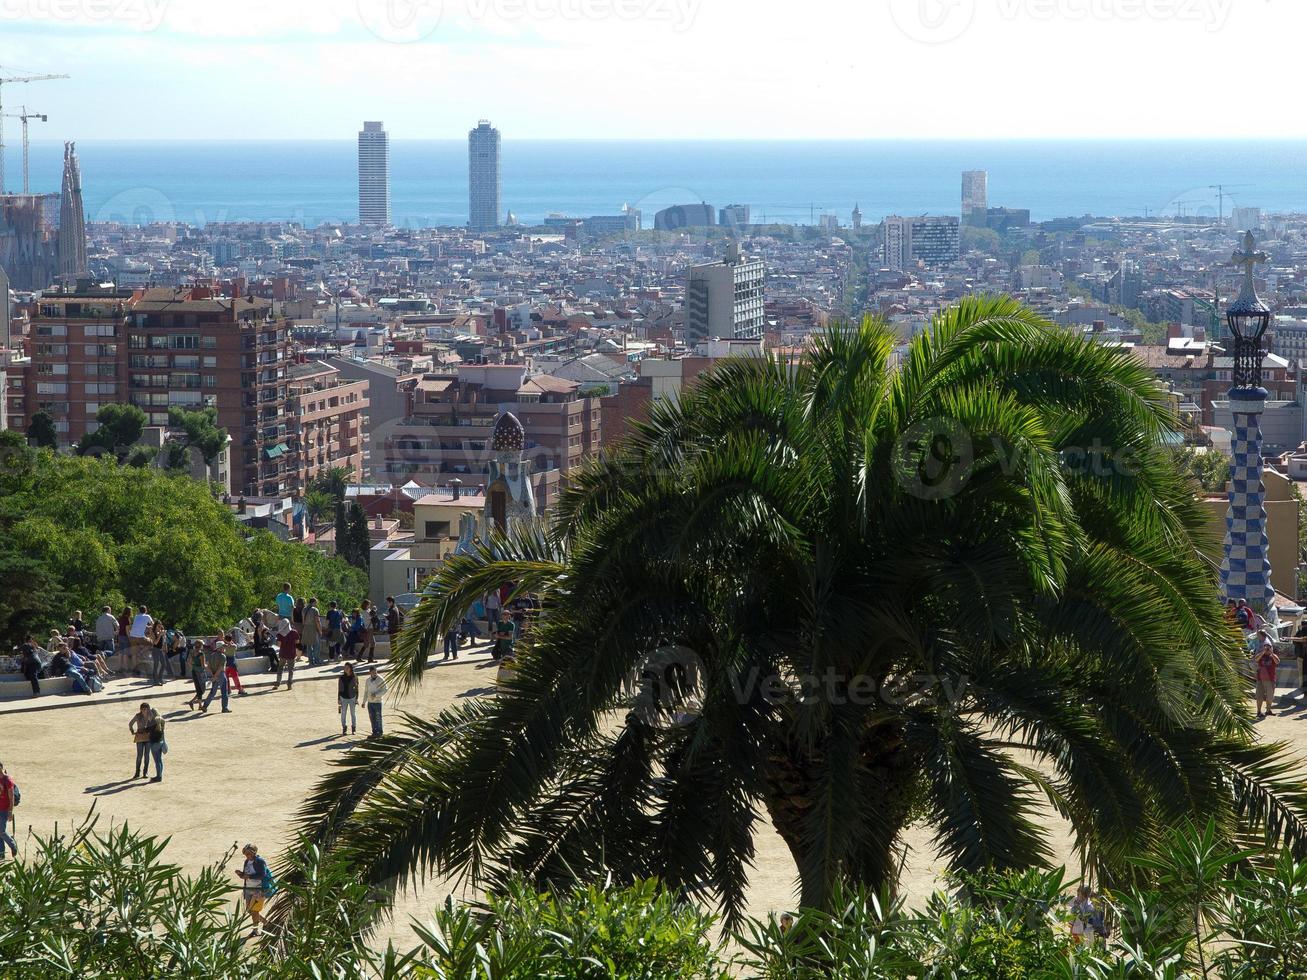 die Stadt Barcelona foto